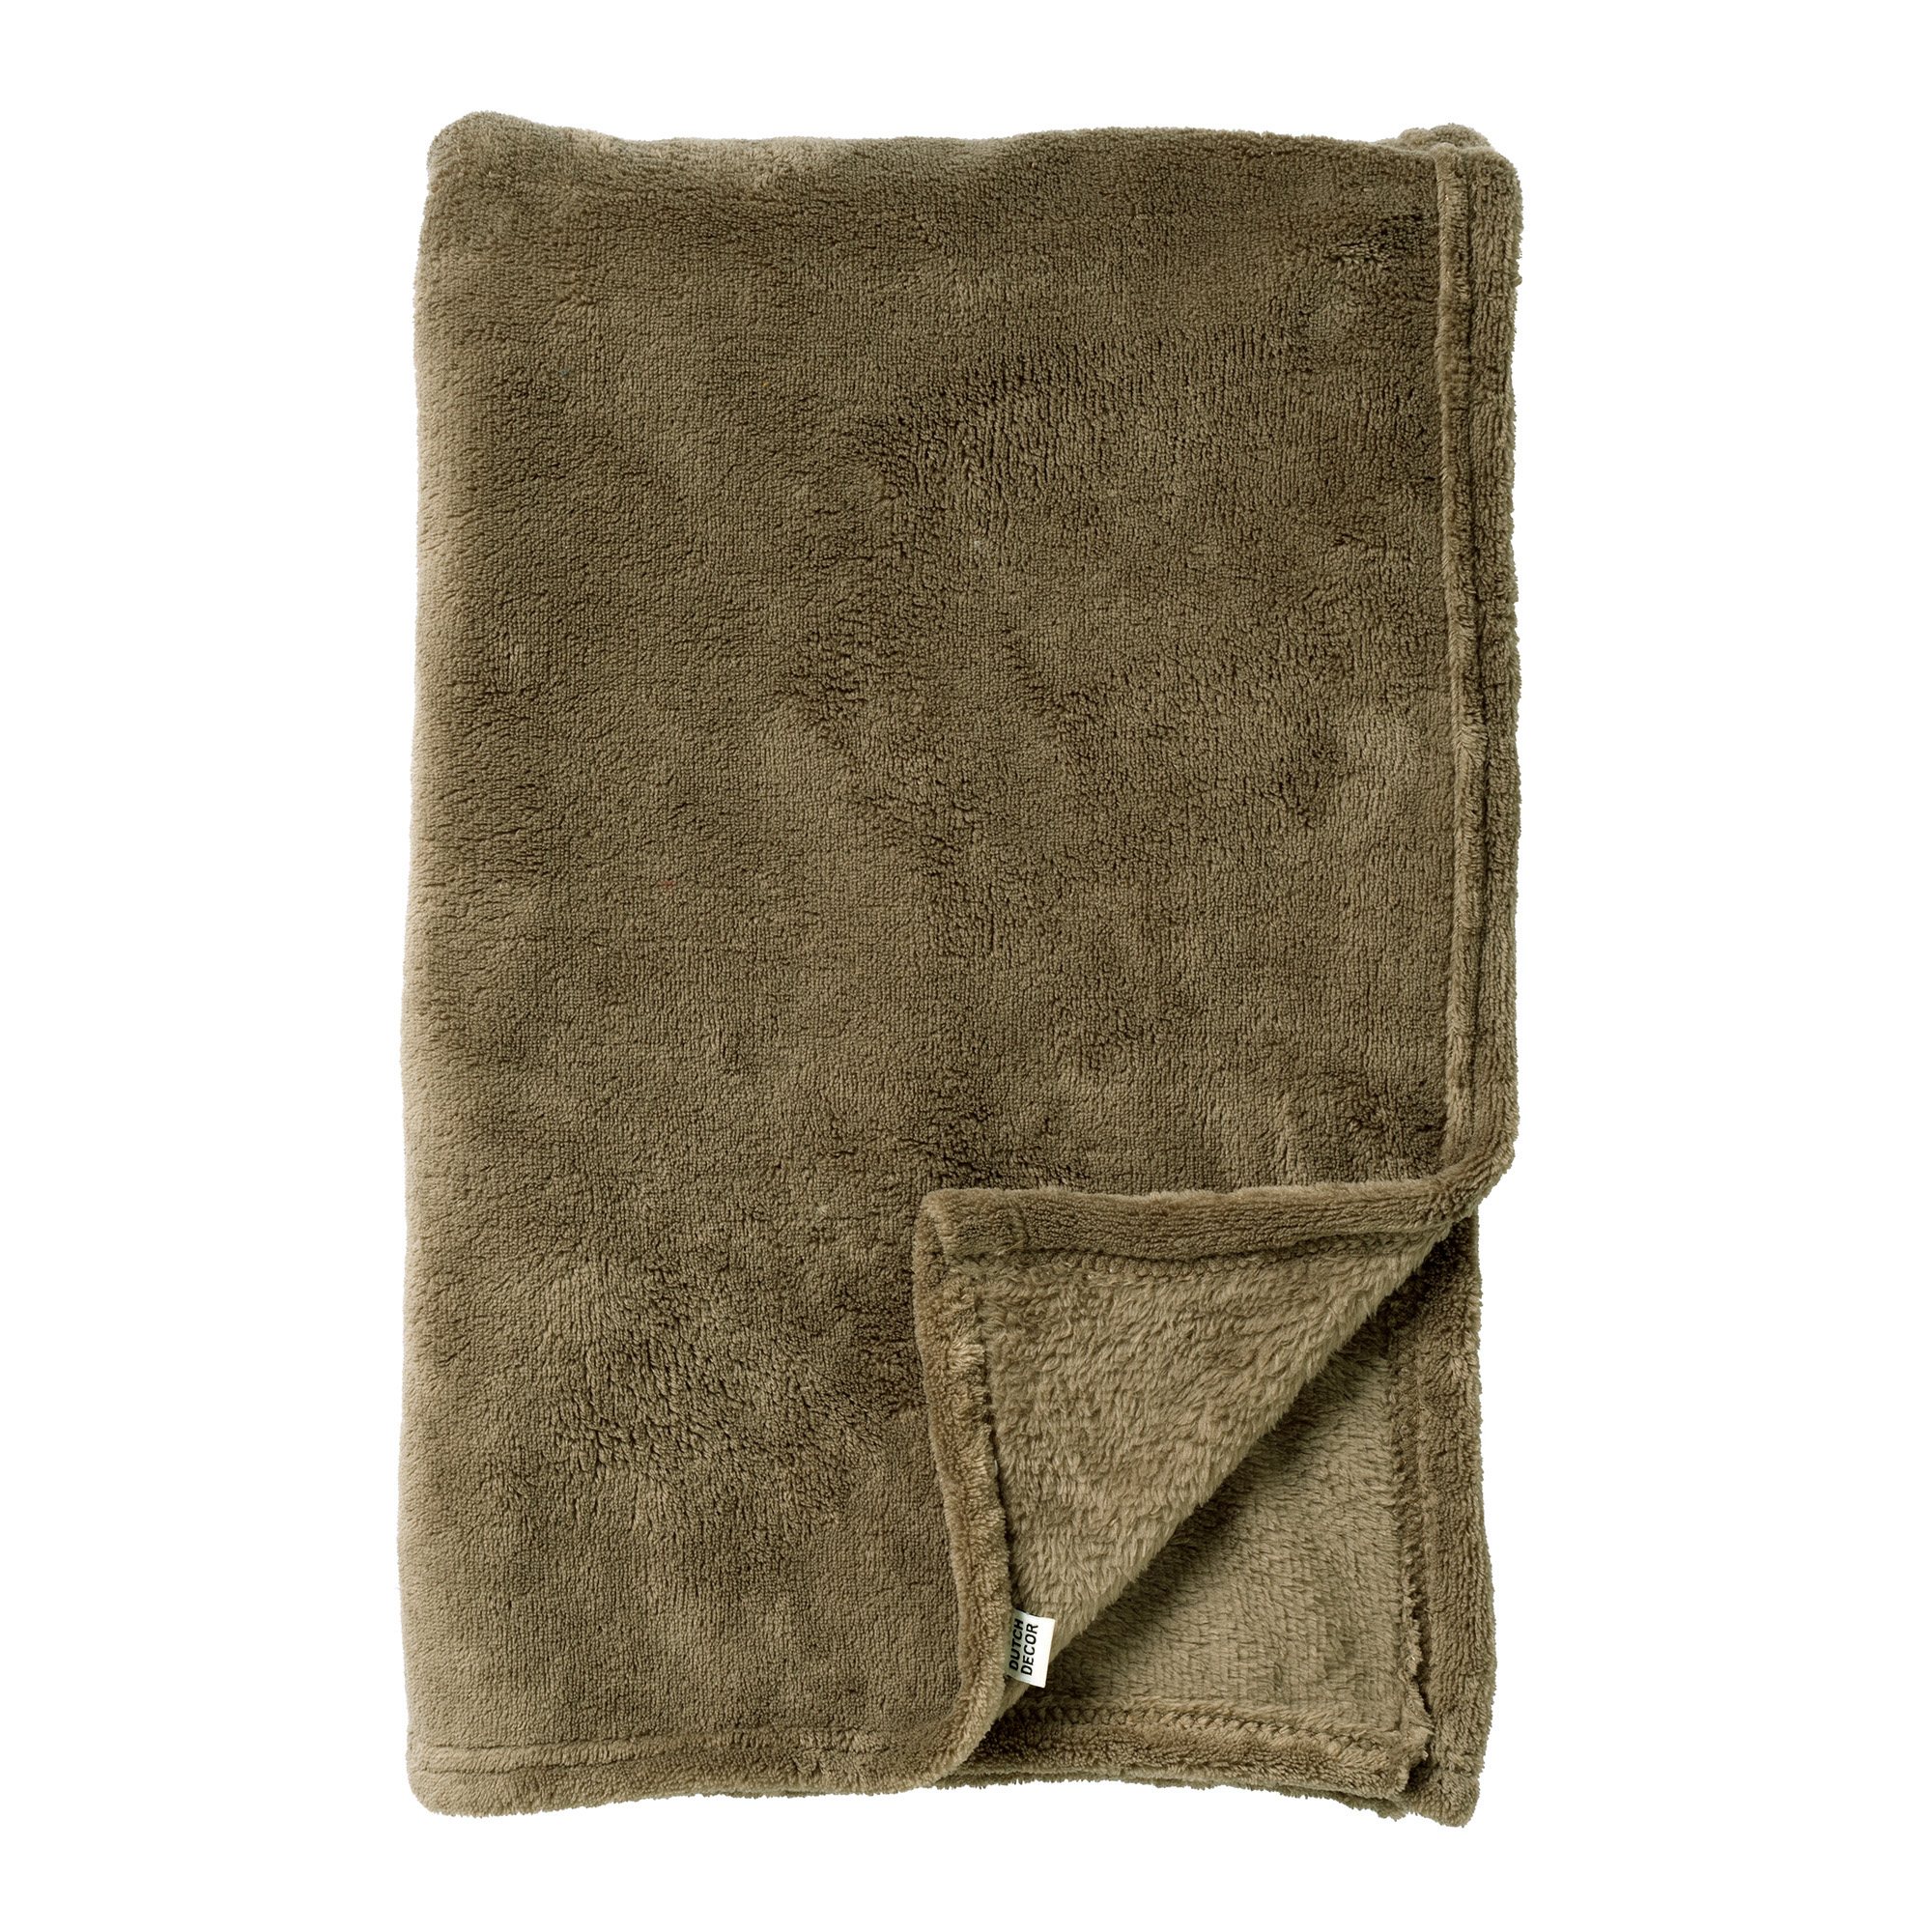 SIDNEY - Plaid 140x180 cm - Fleece deken van 100% gerecycled polyester – superzacht - Eco Line collectie - Military Olive - groen